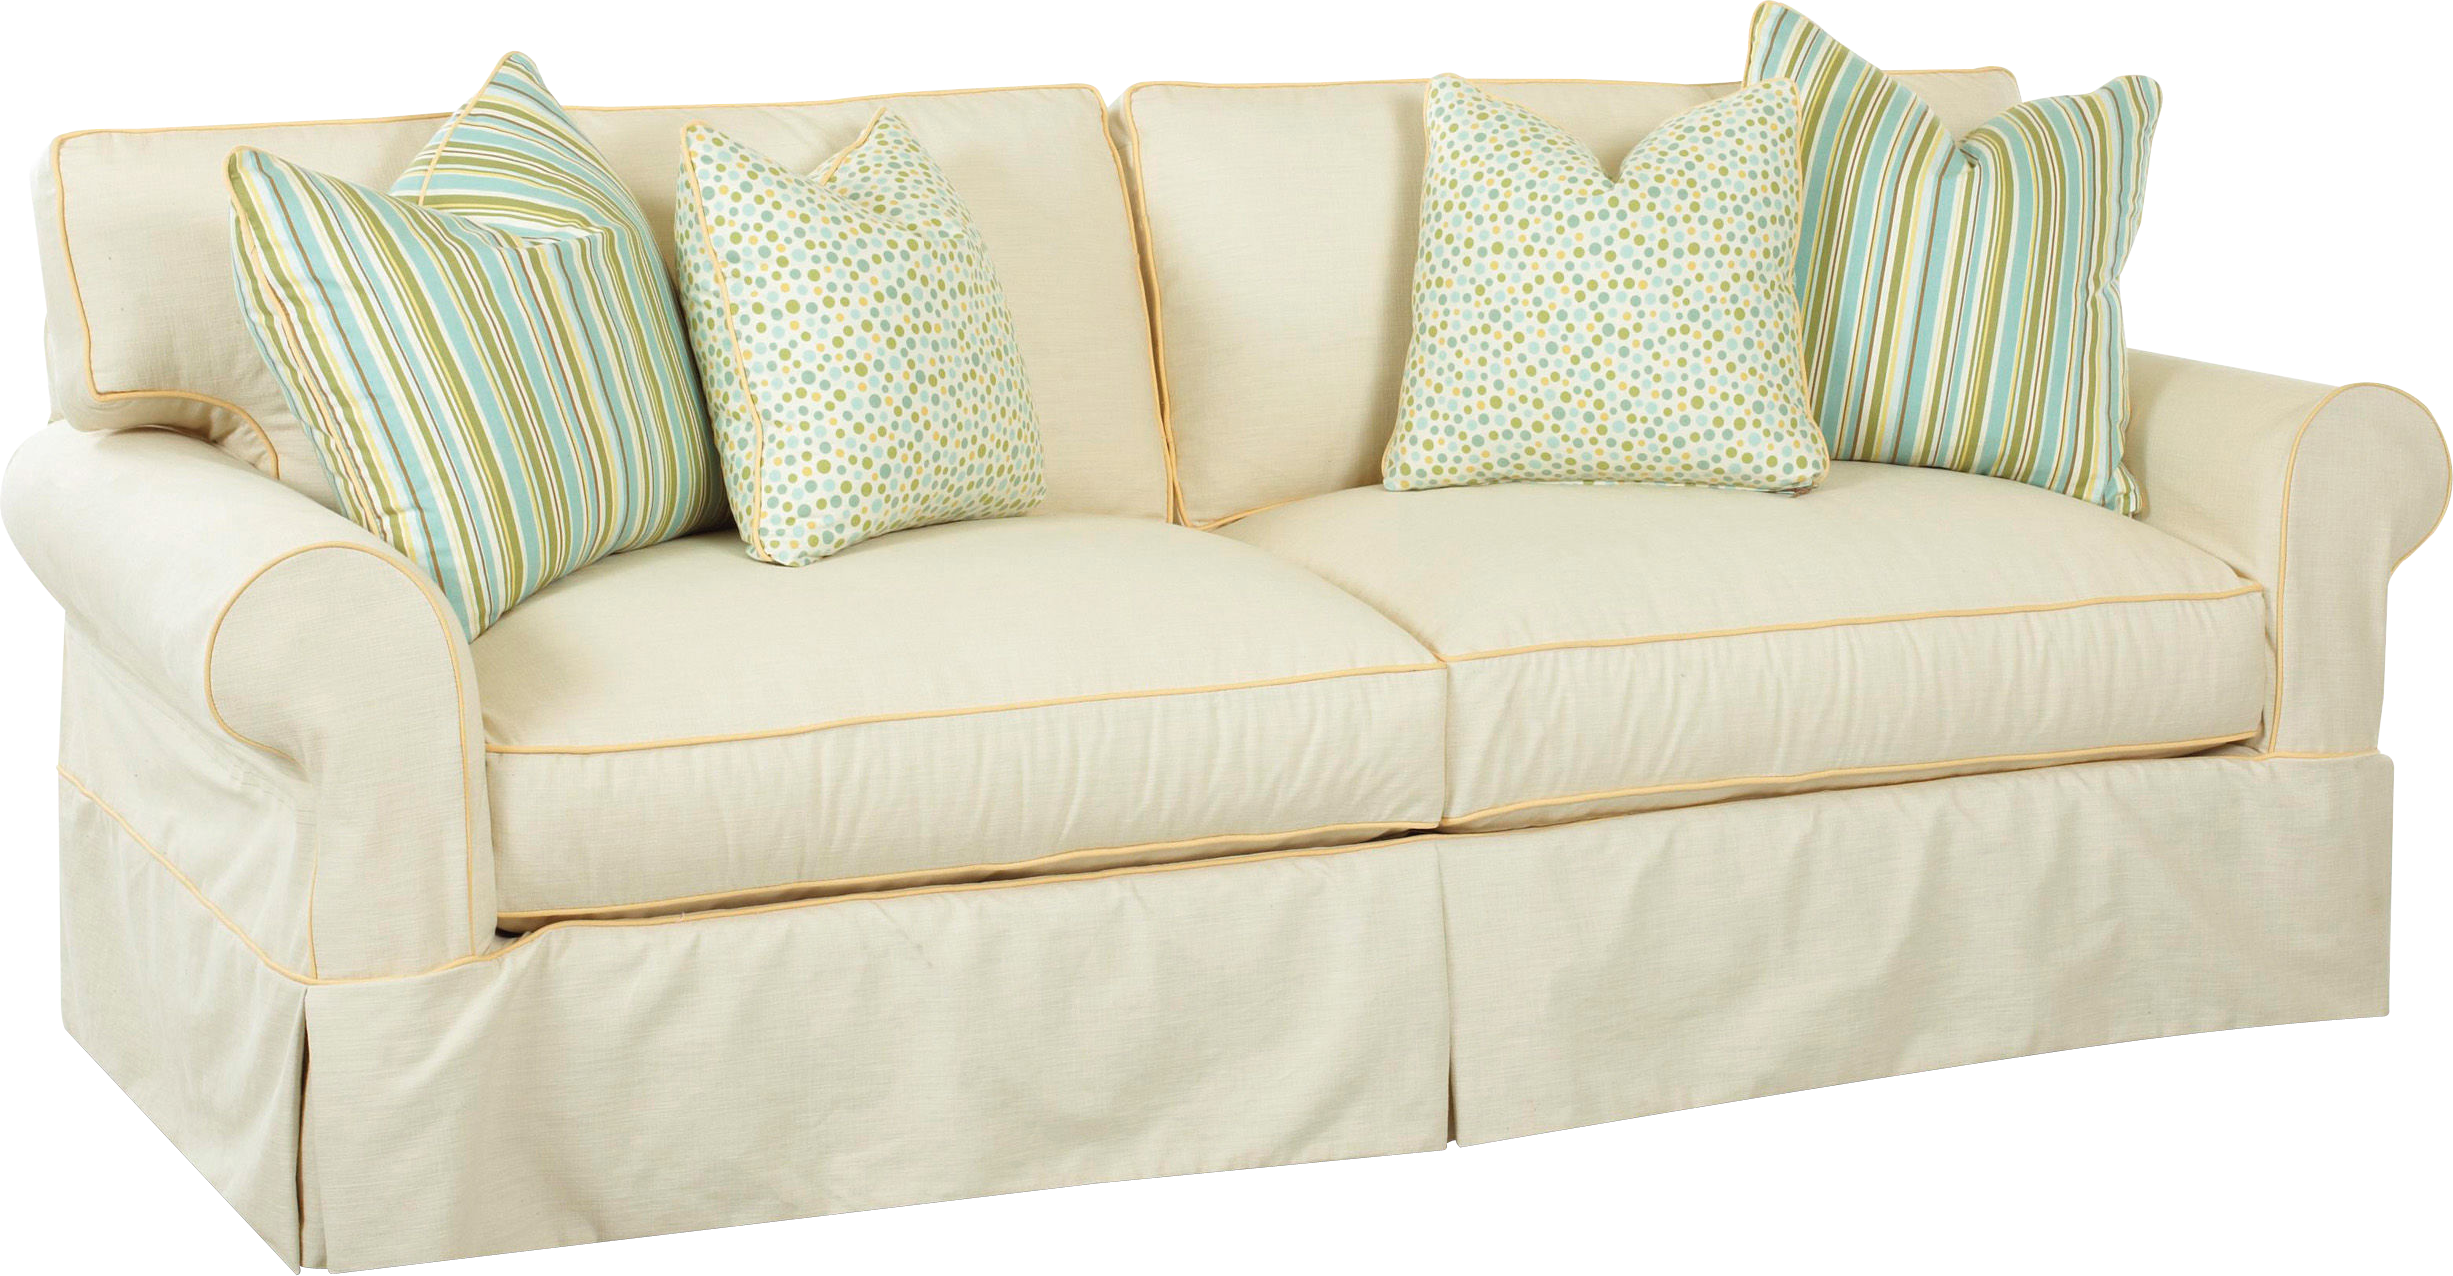 Ghế sofa trắng